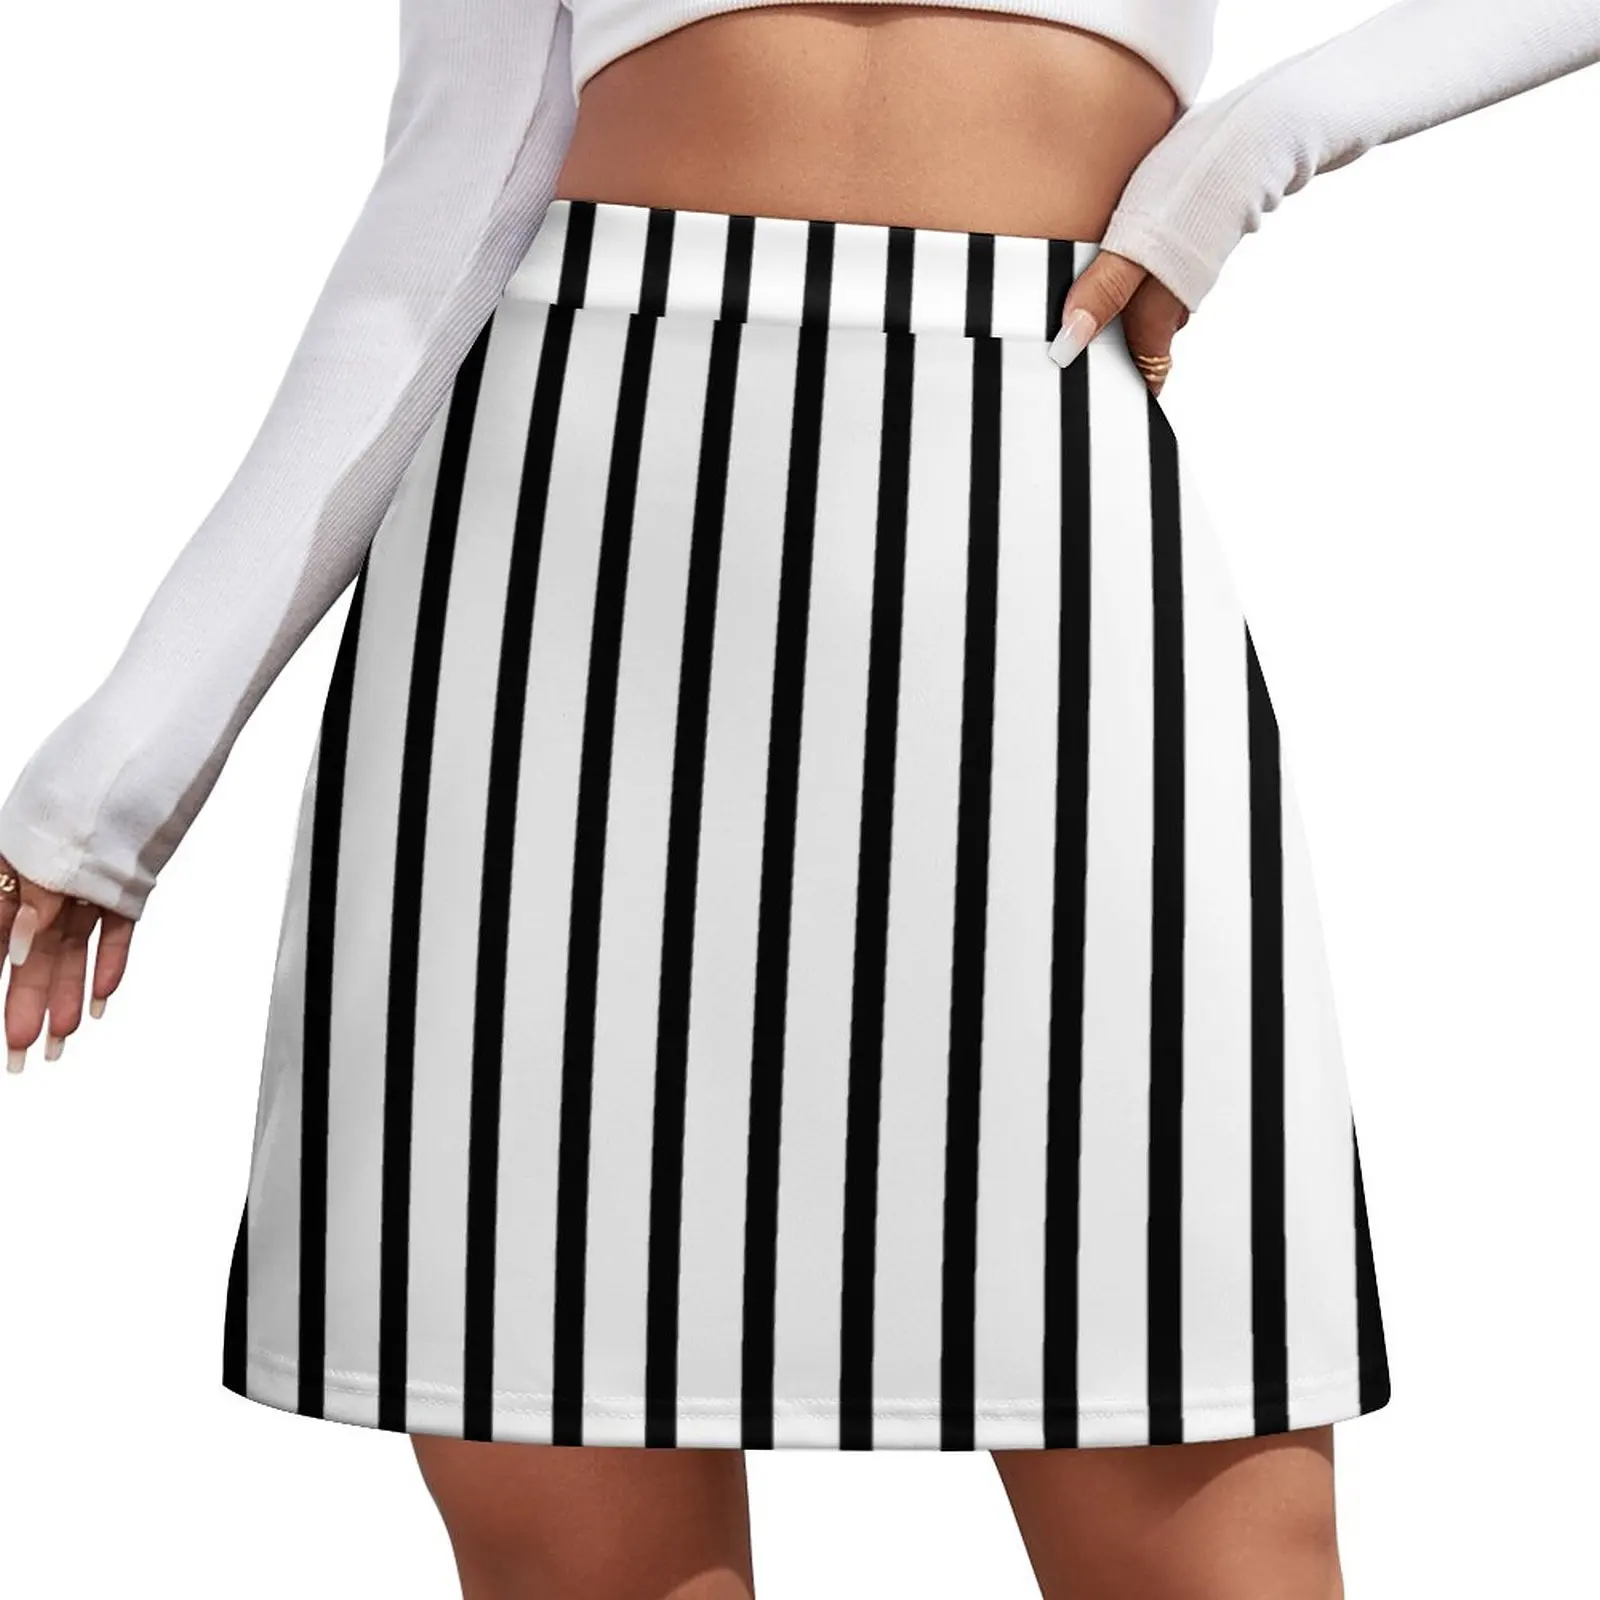 Thin Black White Stripes Miniskirt Mini Skirt korean ladies summer cute skirt fashion the white stripes the white stripes lp